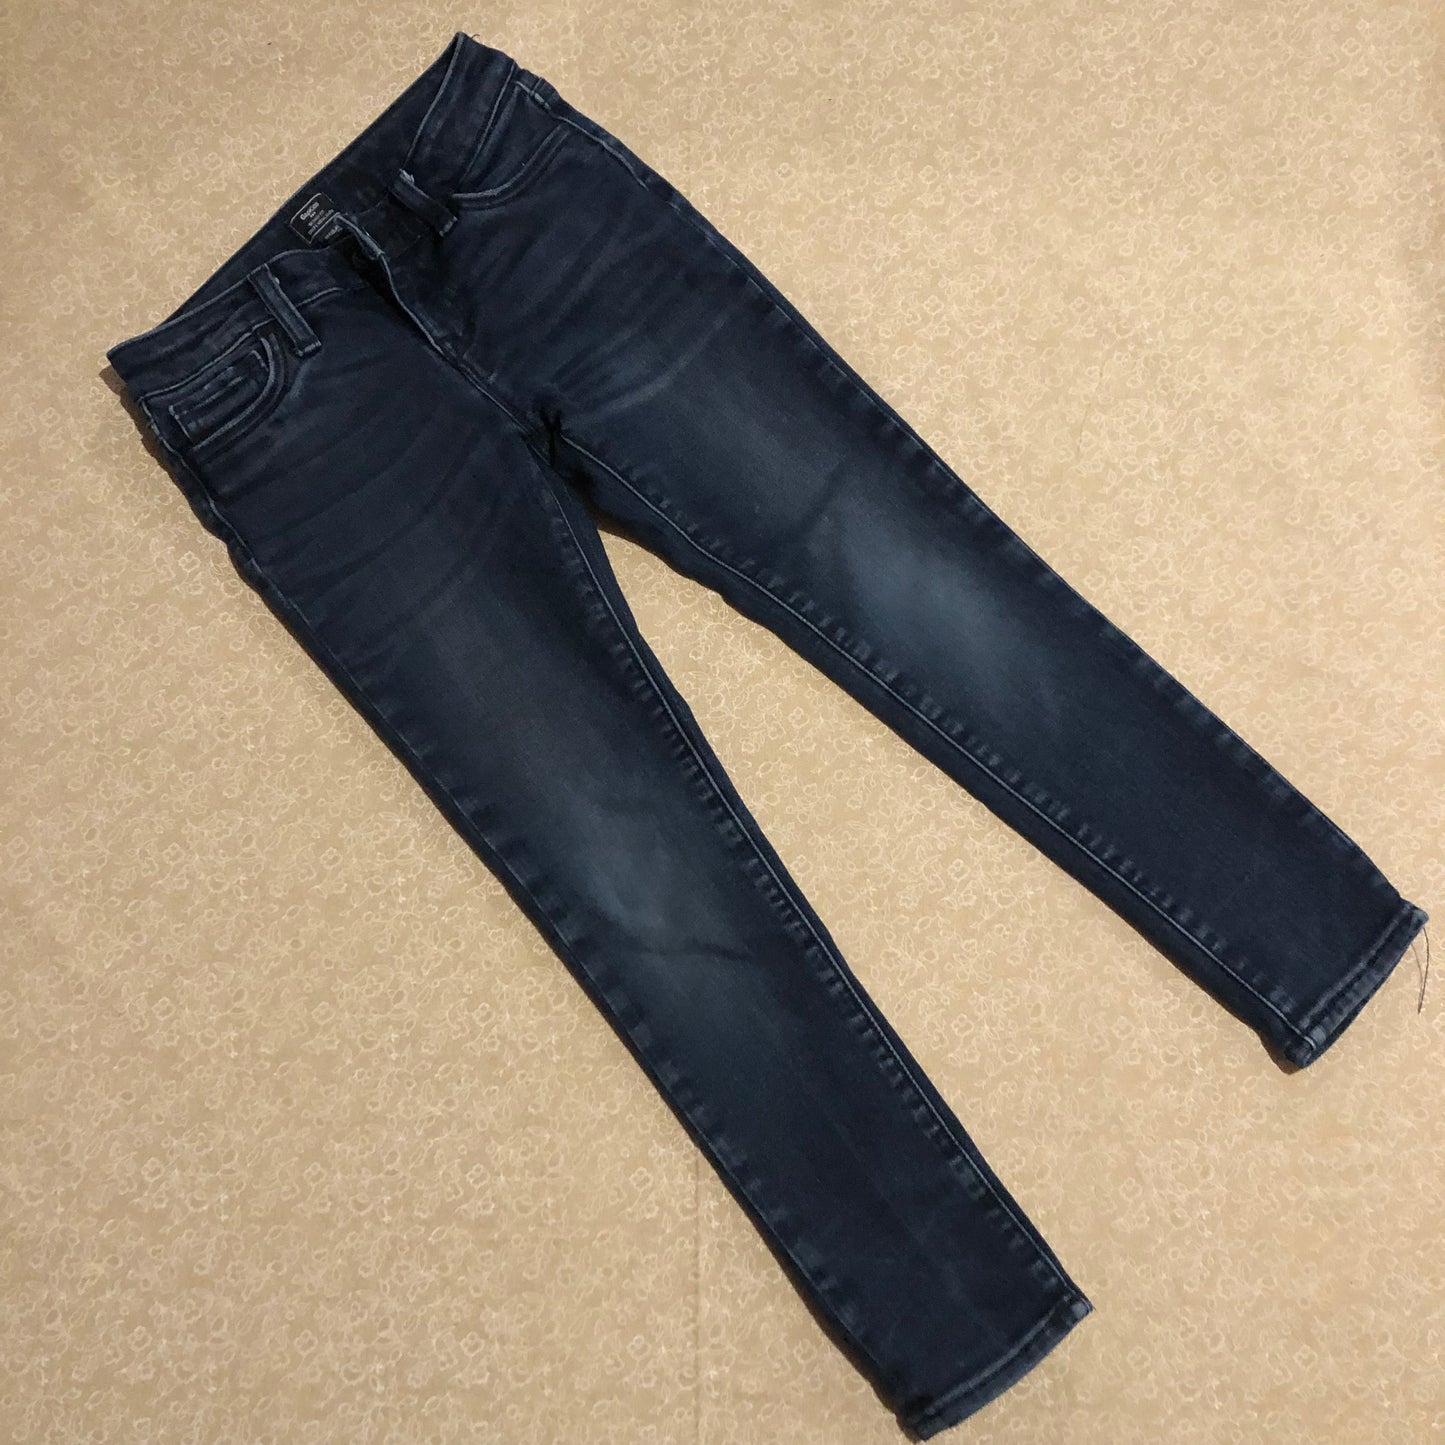 7-pants-gap-skinny-jeans